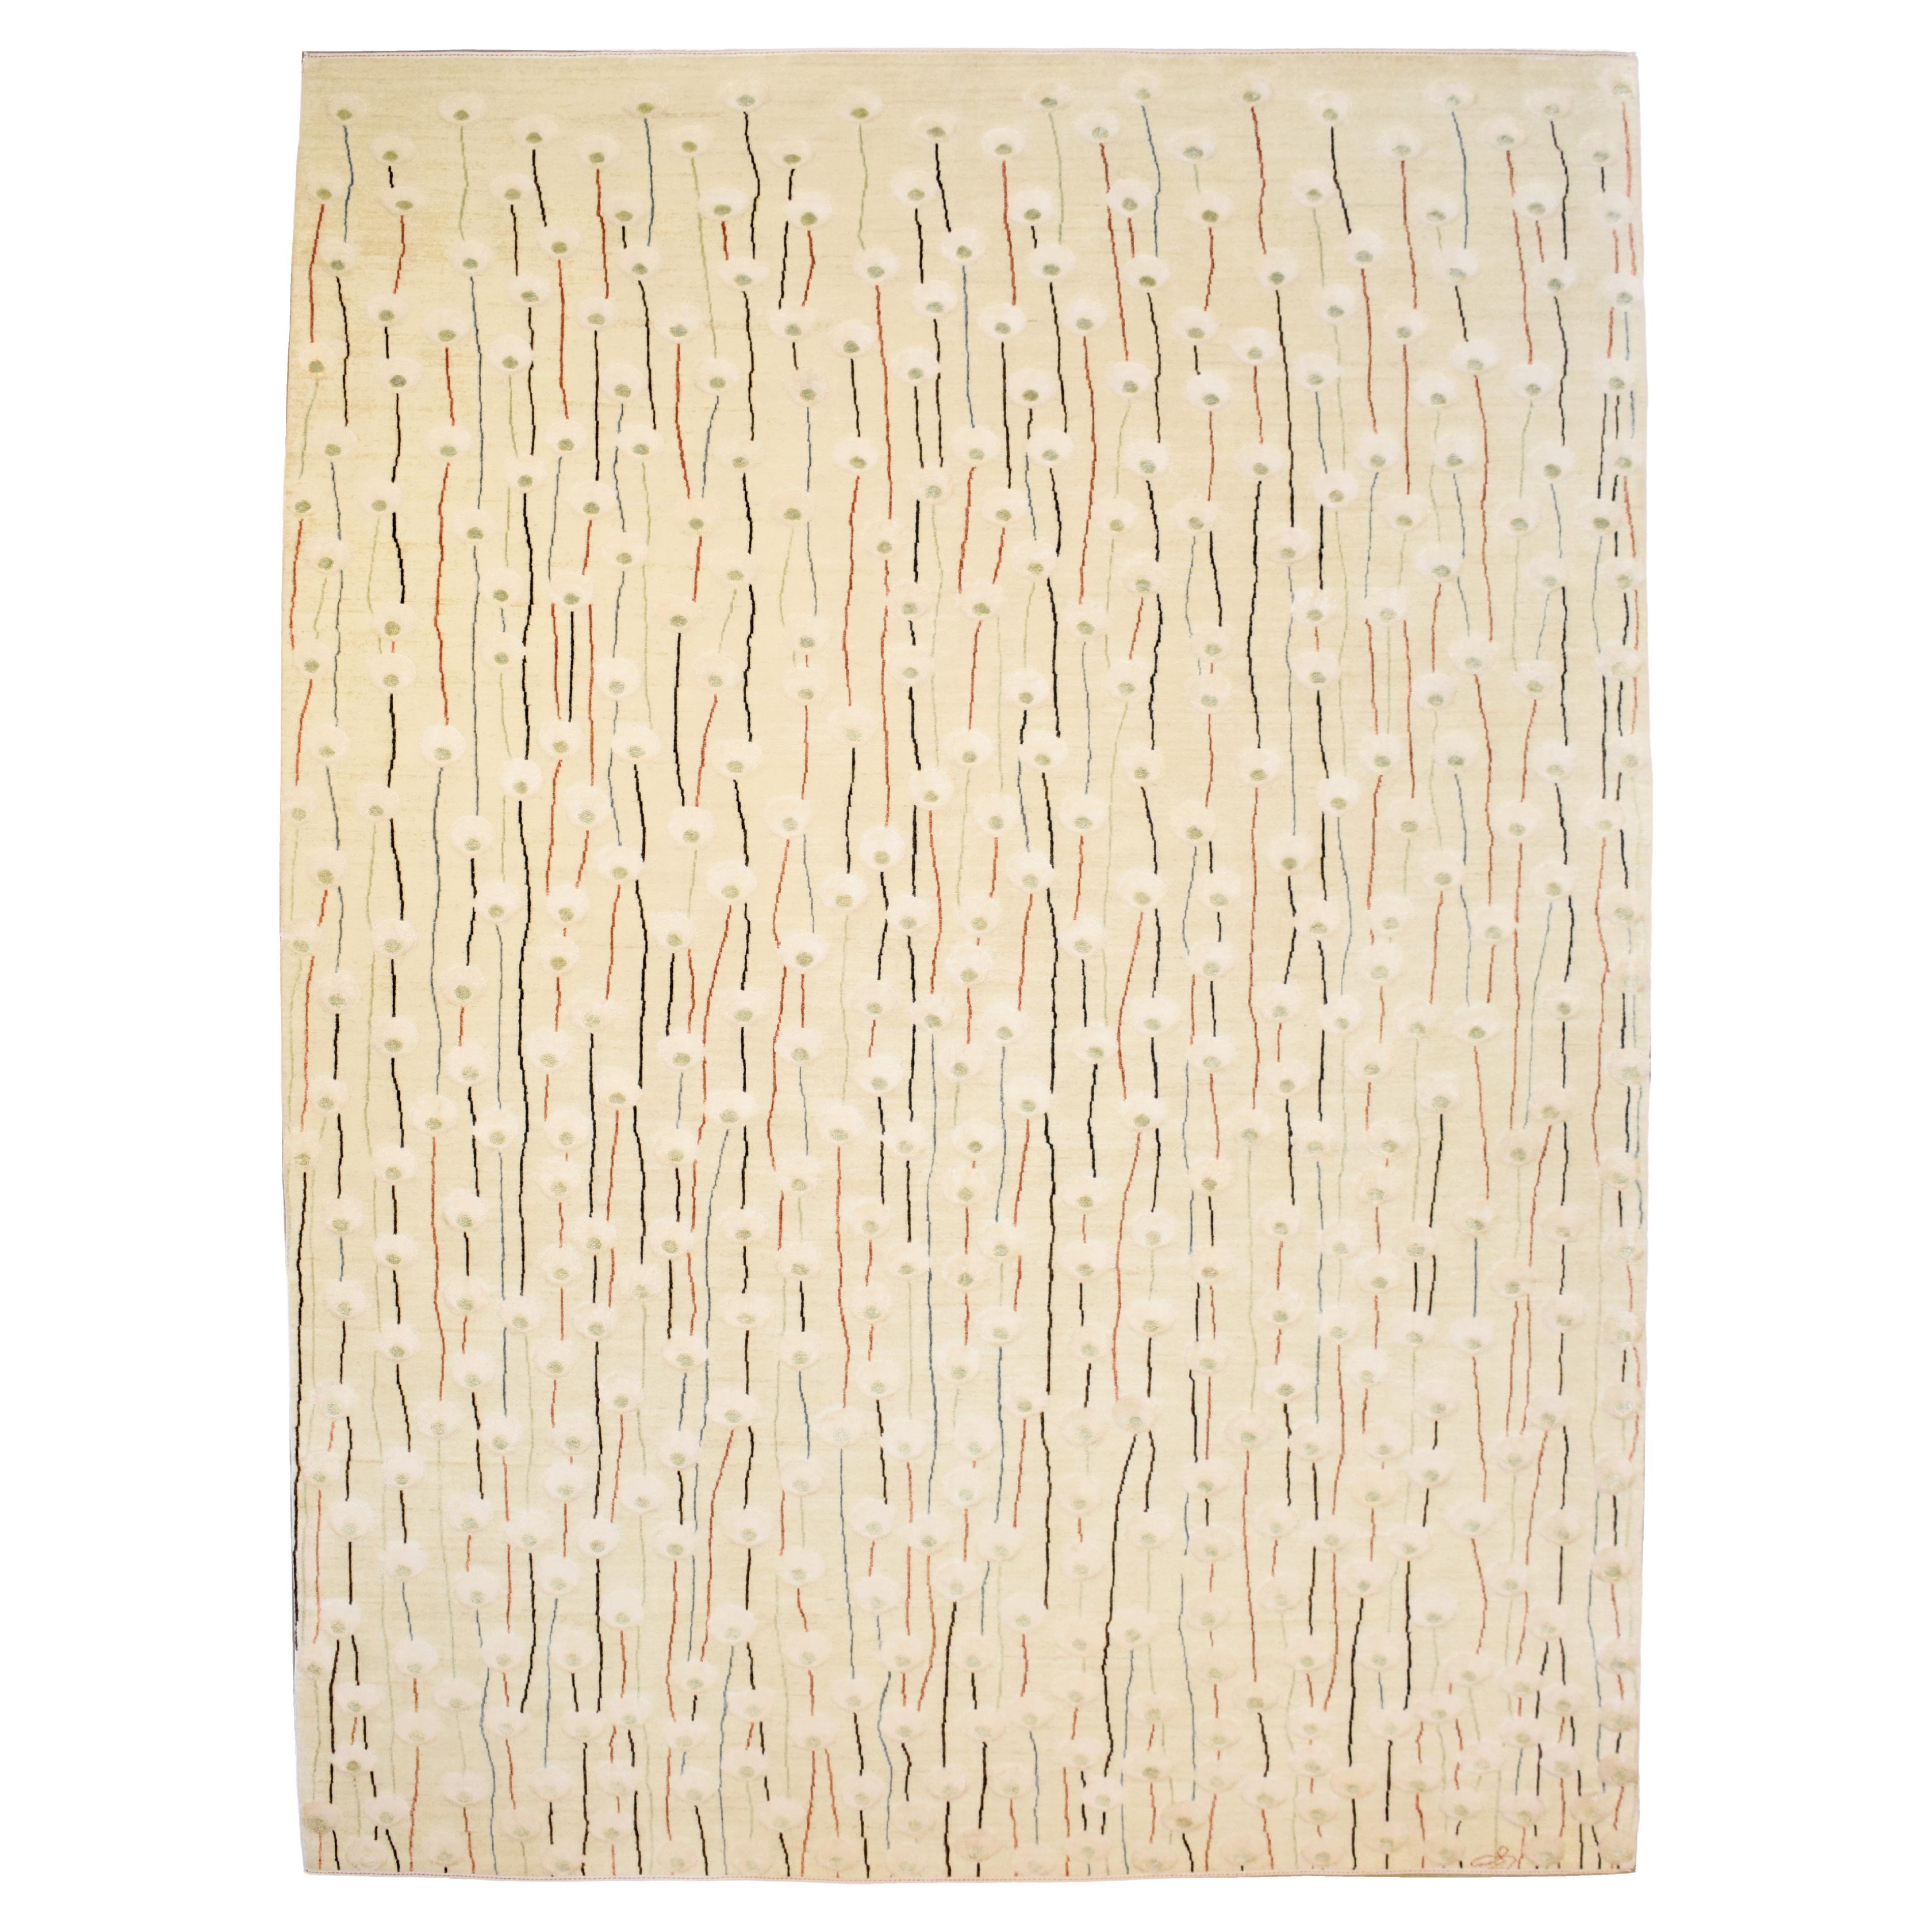 Orley Shabahang „Poppies“ Art Deco Persischer Teppich, Wolle, handgeknüpft, 9' x 12'